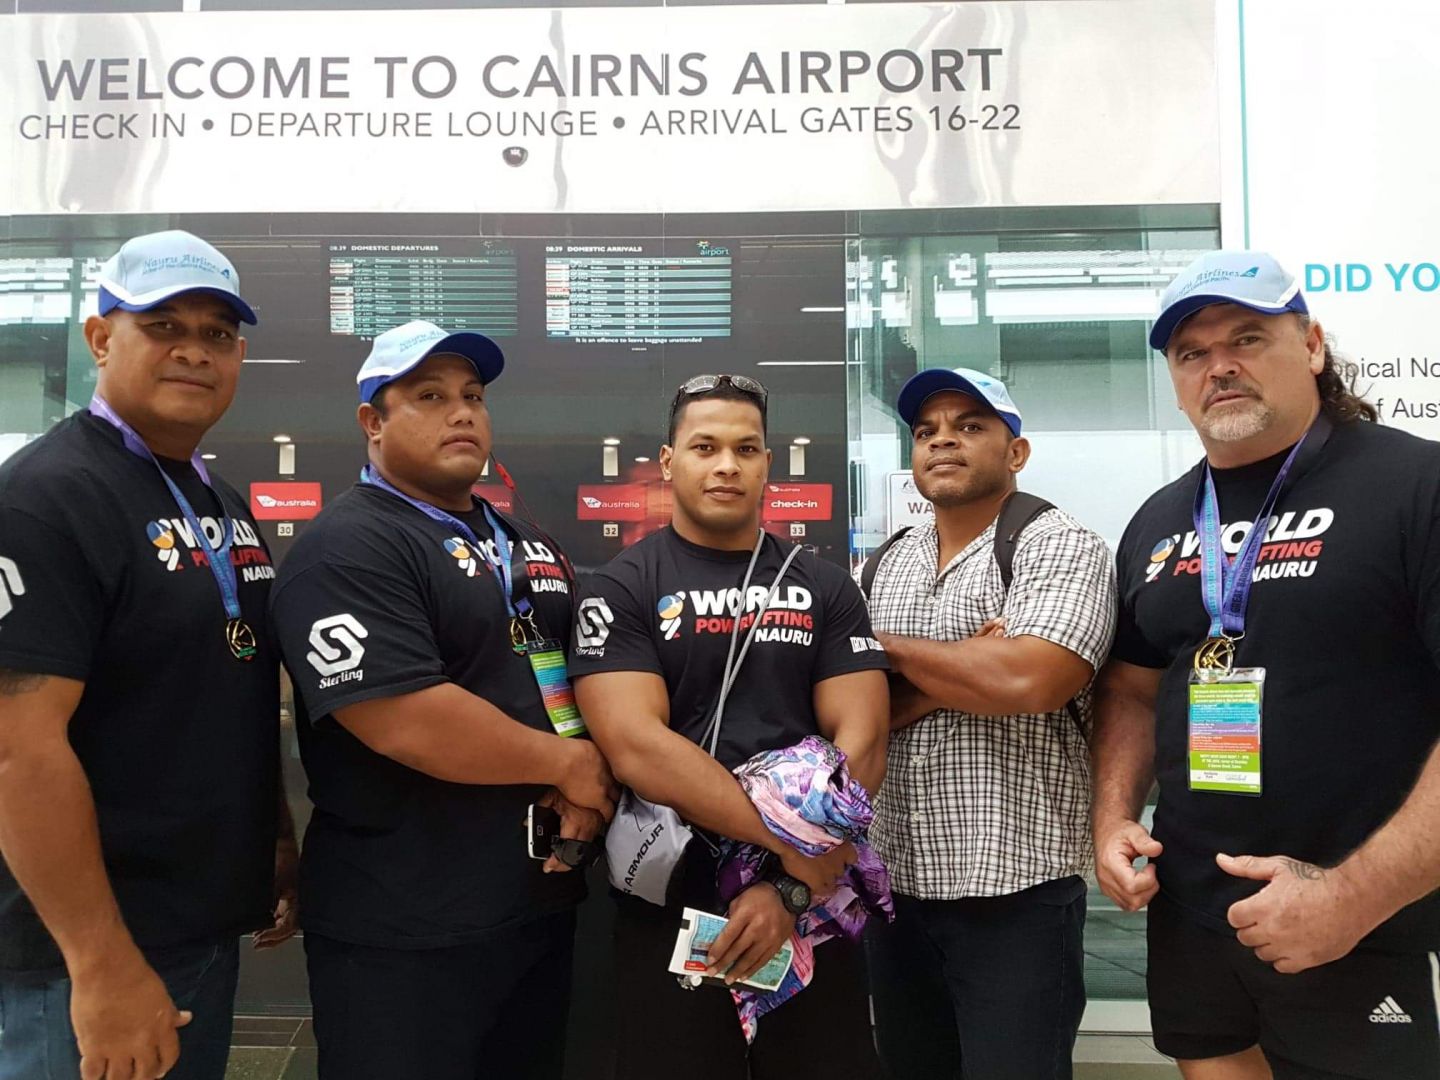 Sport: Nauruan powerlifter crowned World's Strongest Man